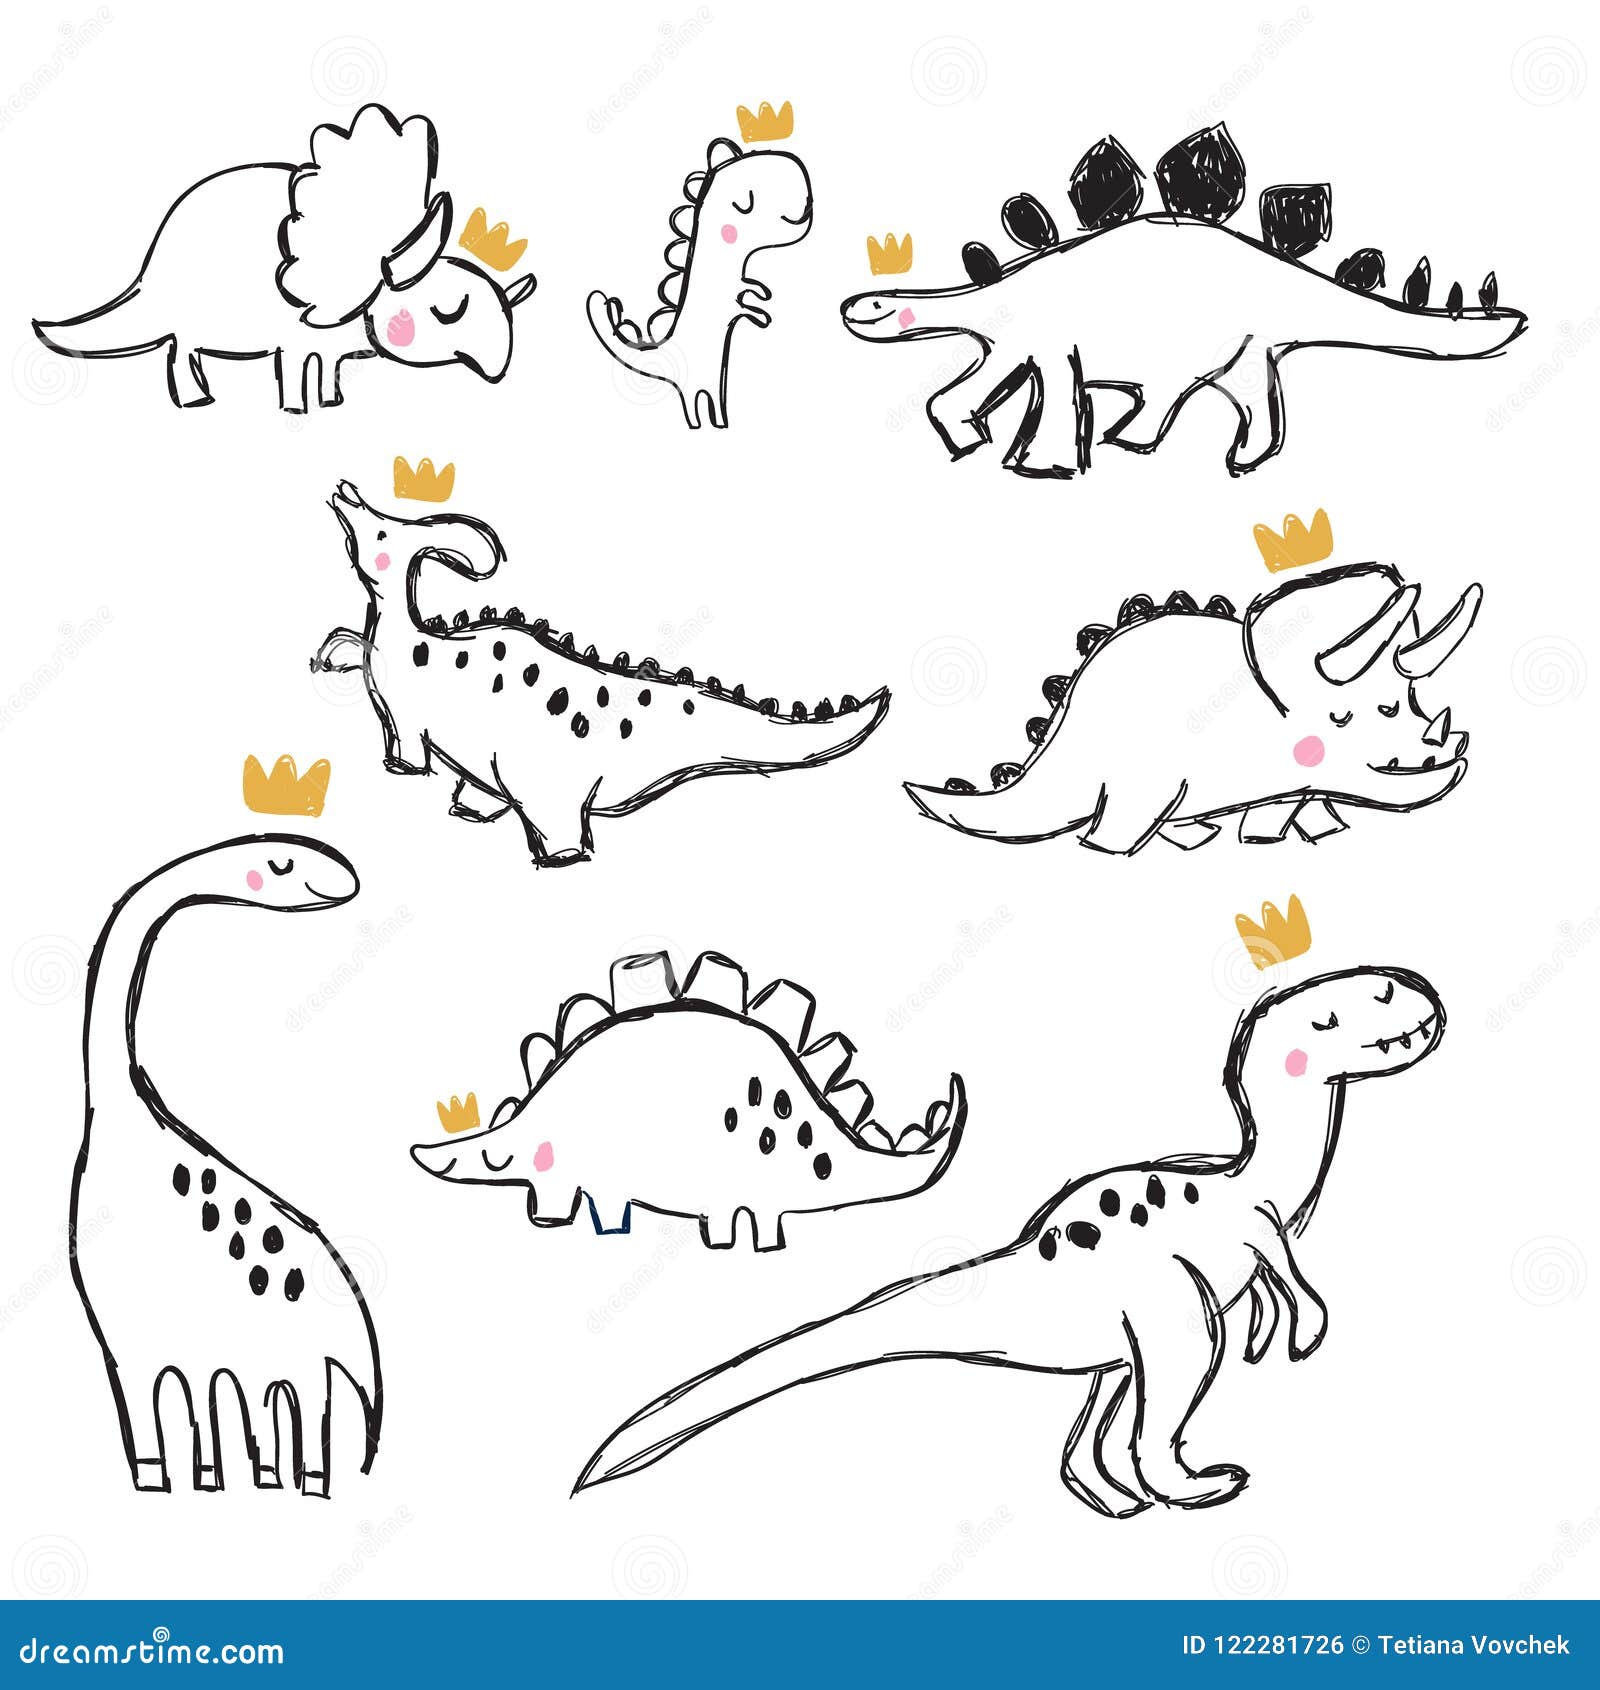 Hand Drawing Dinosaur Illustration Vector Dream Big Funny Cartoon Dino Drawn Doodle Design Girls Kids Children S Fashion Image122281726